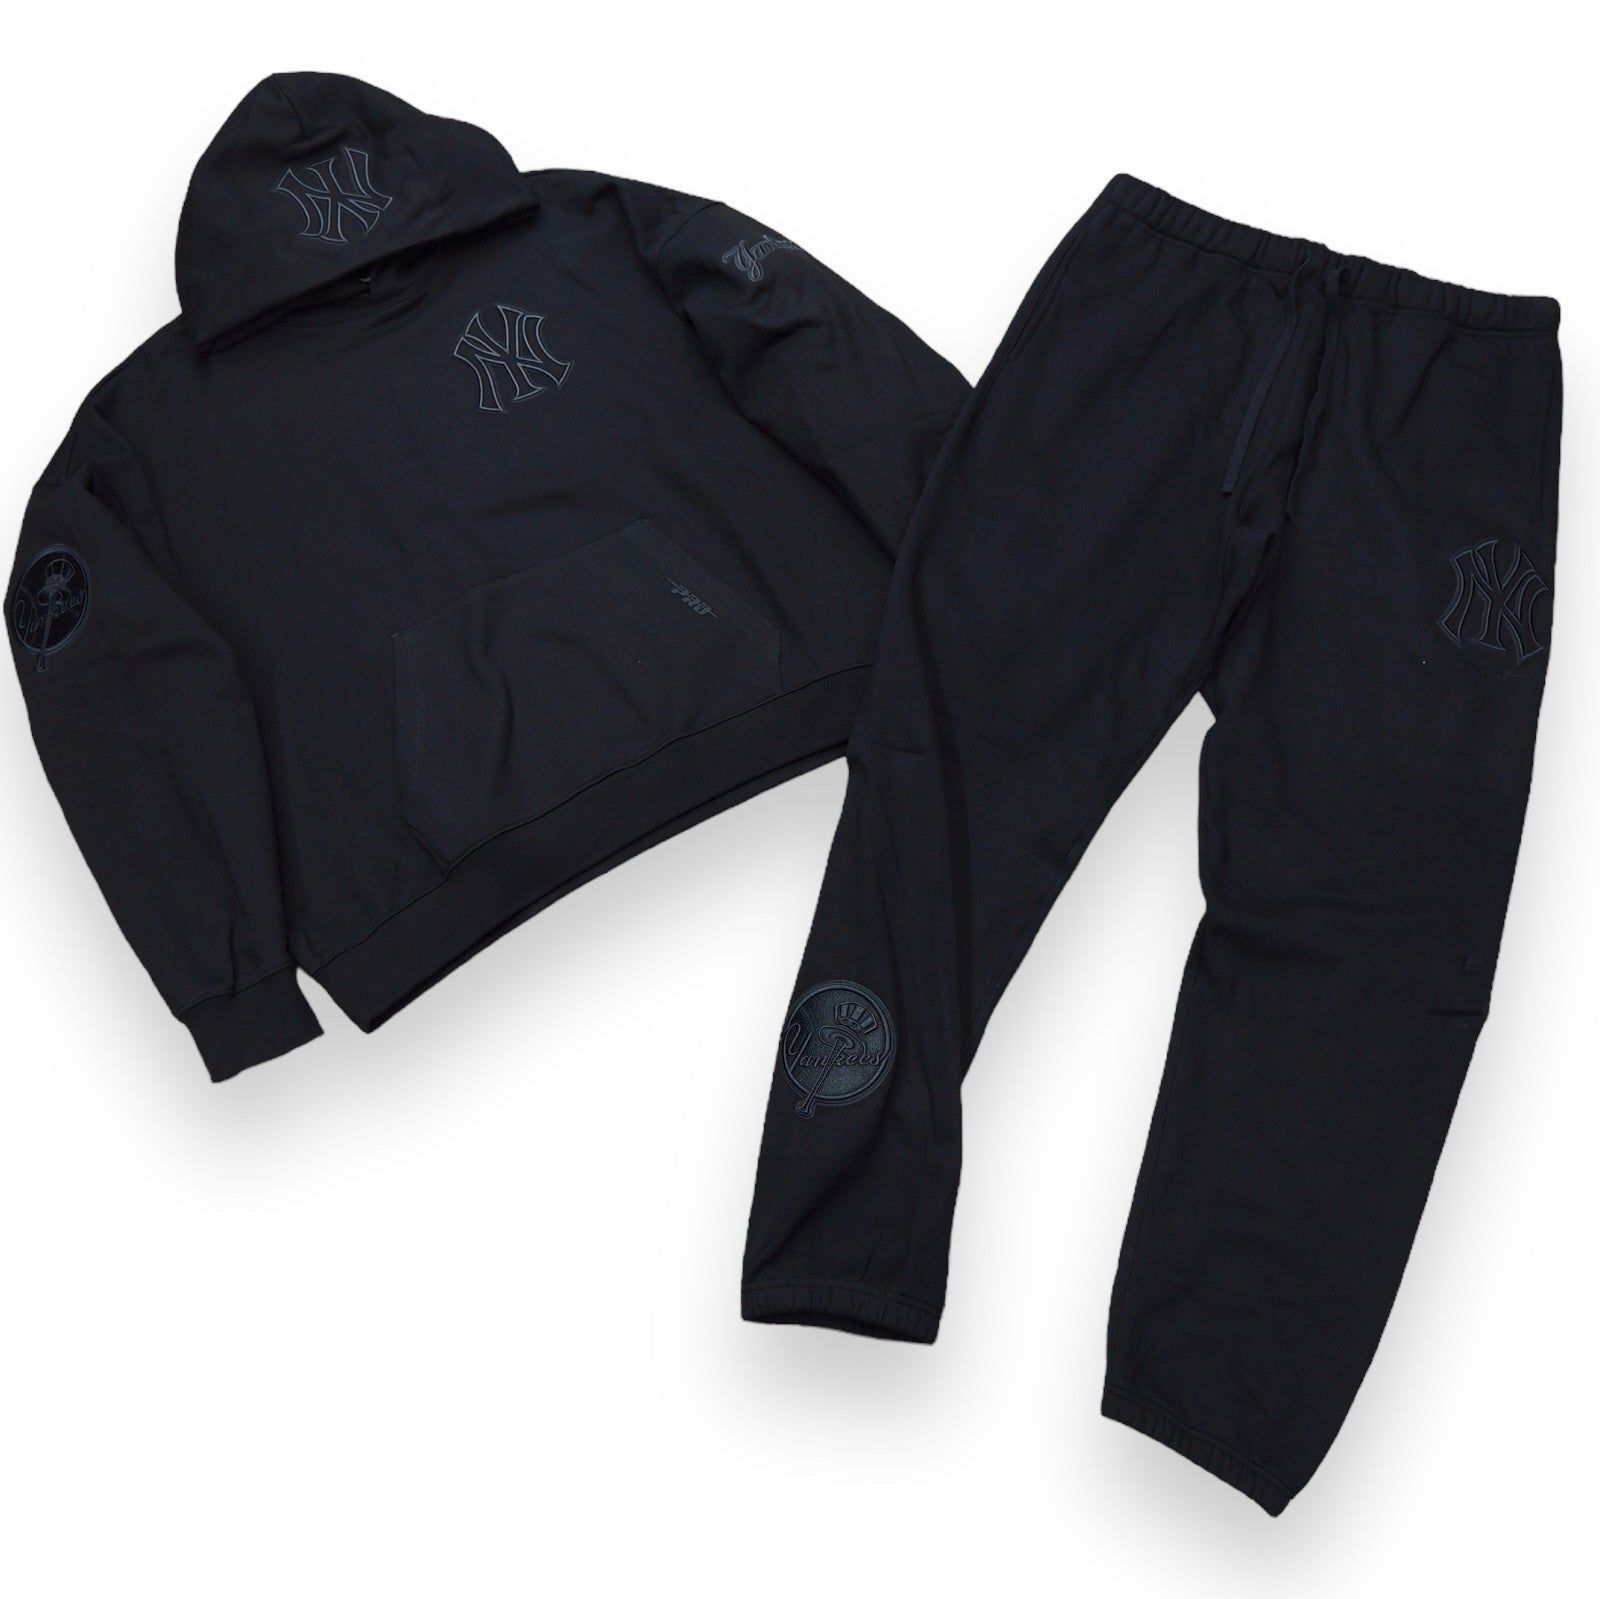 Pro Standard New York Yankees Sweatsuit (Black)